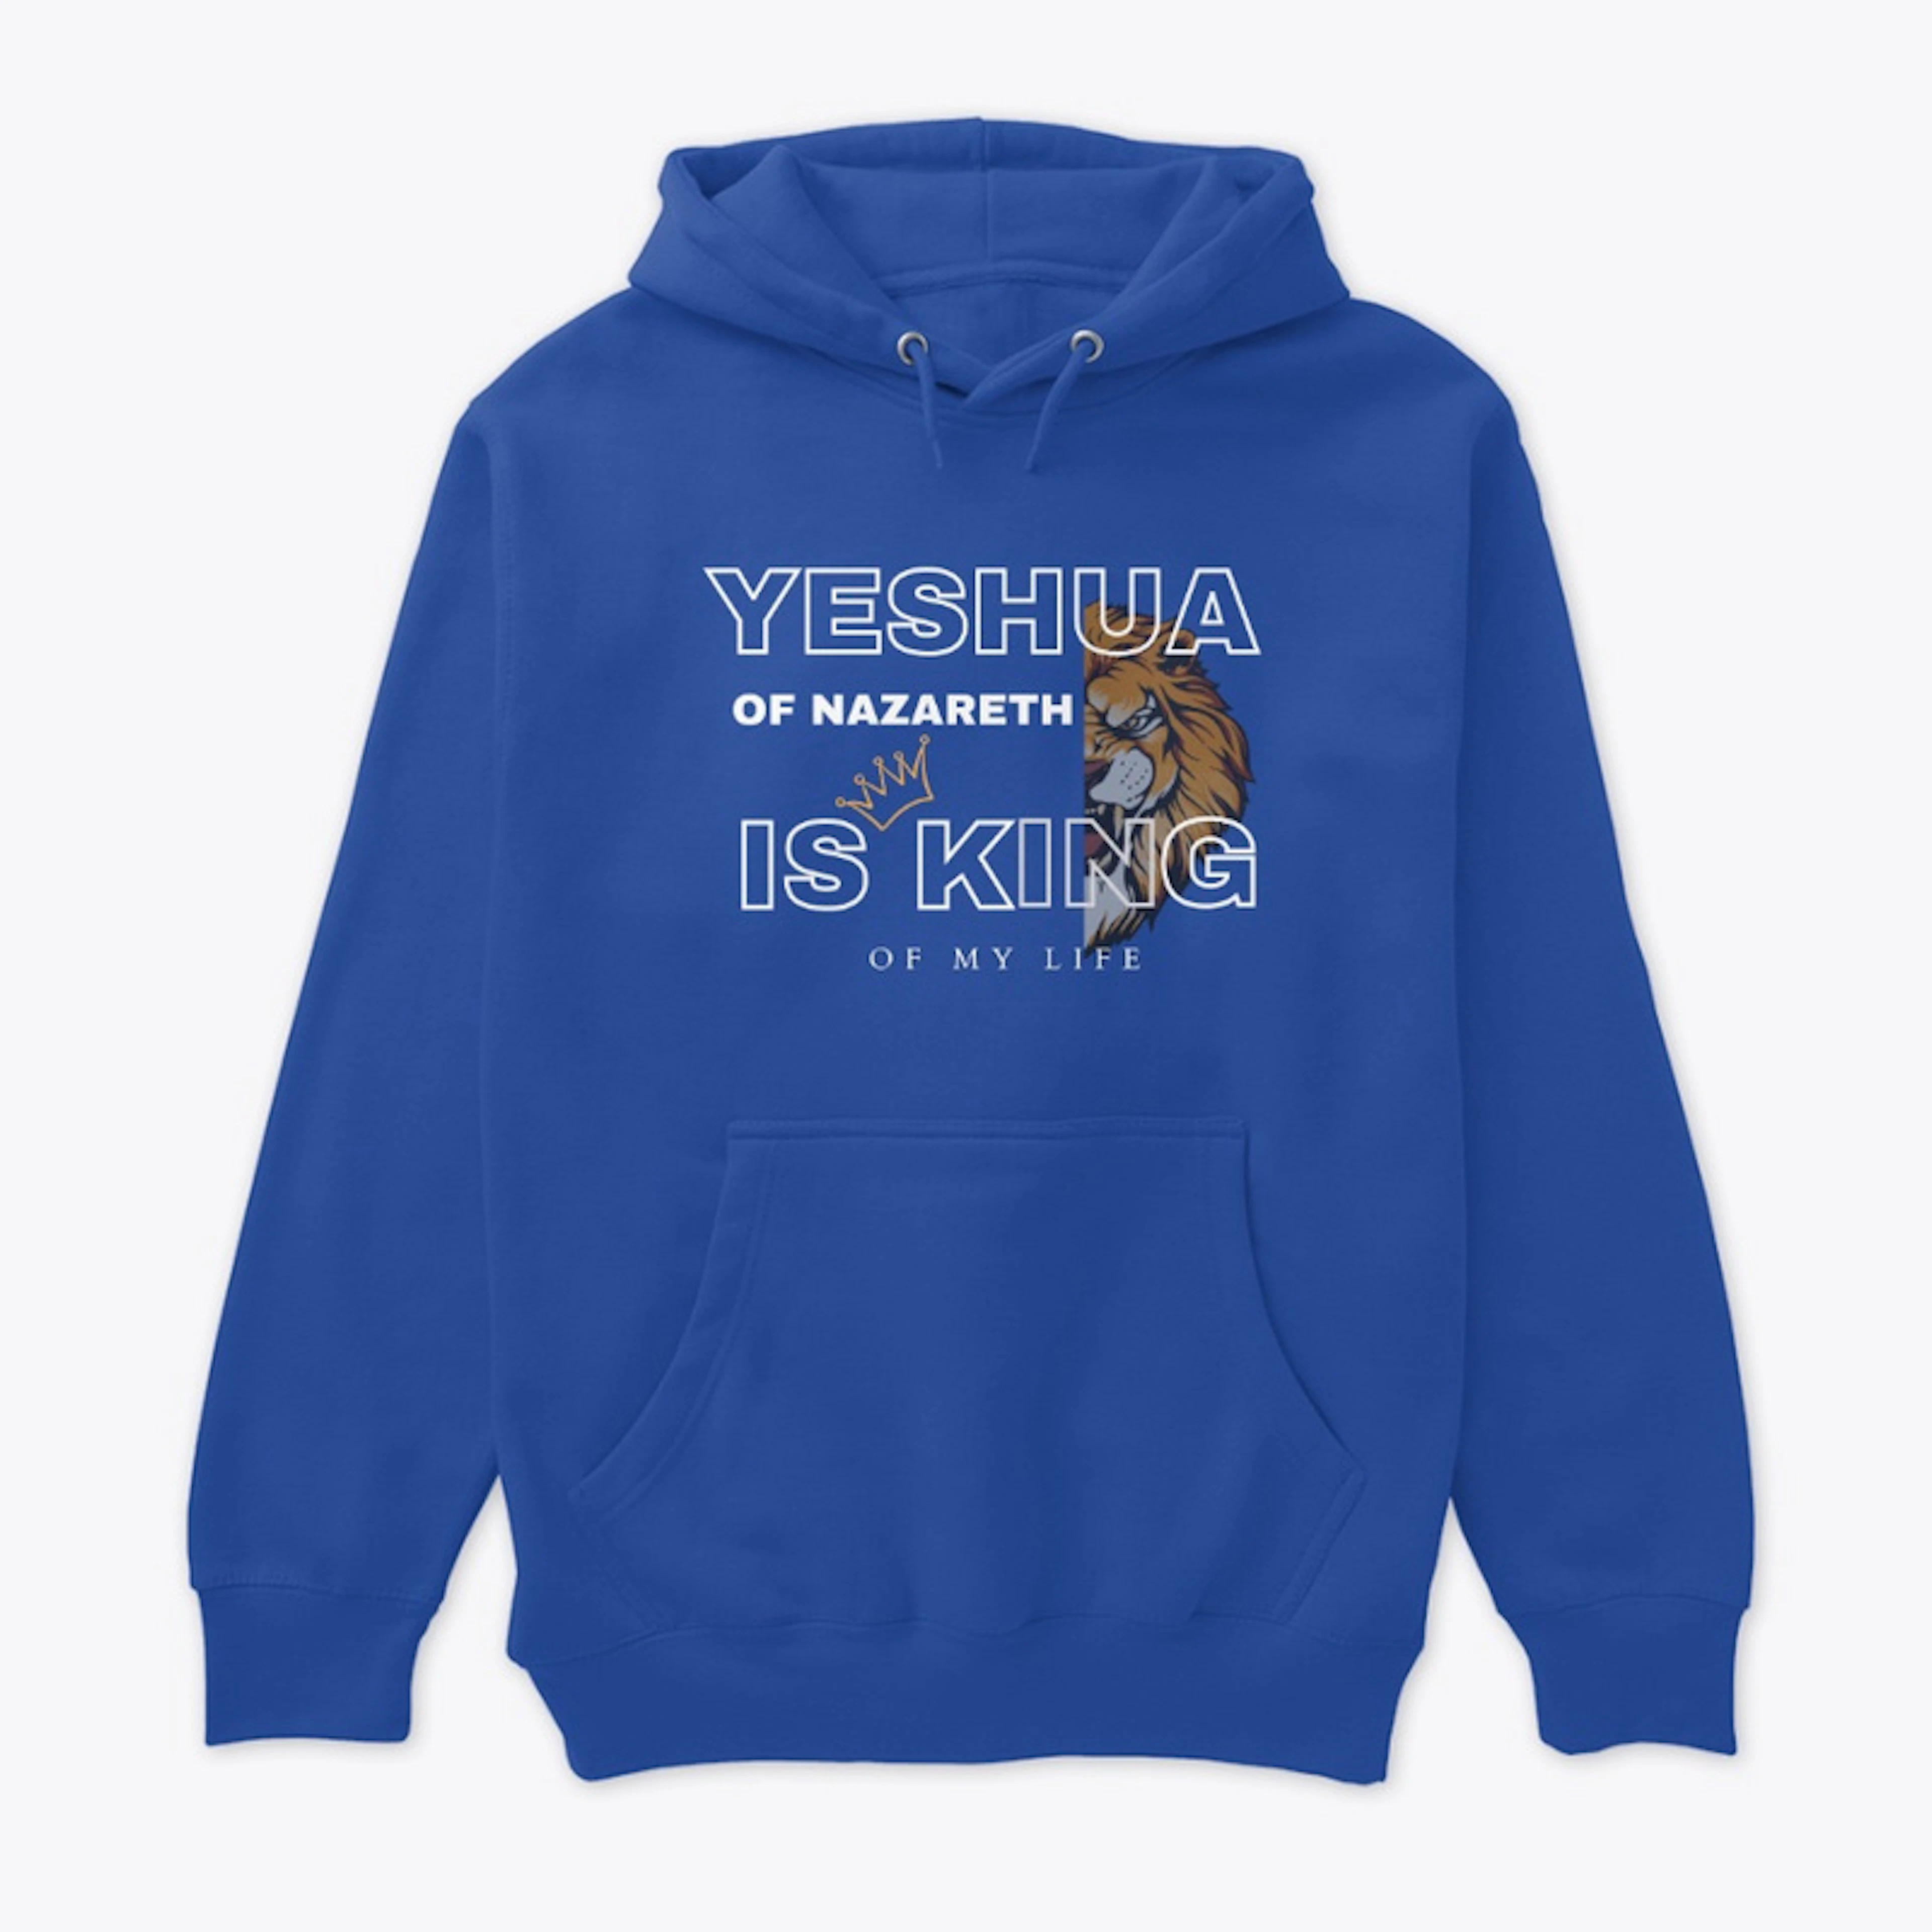 Yeshua is my King